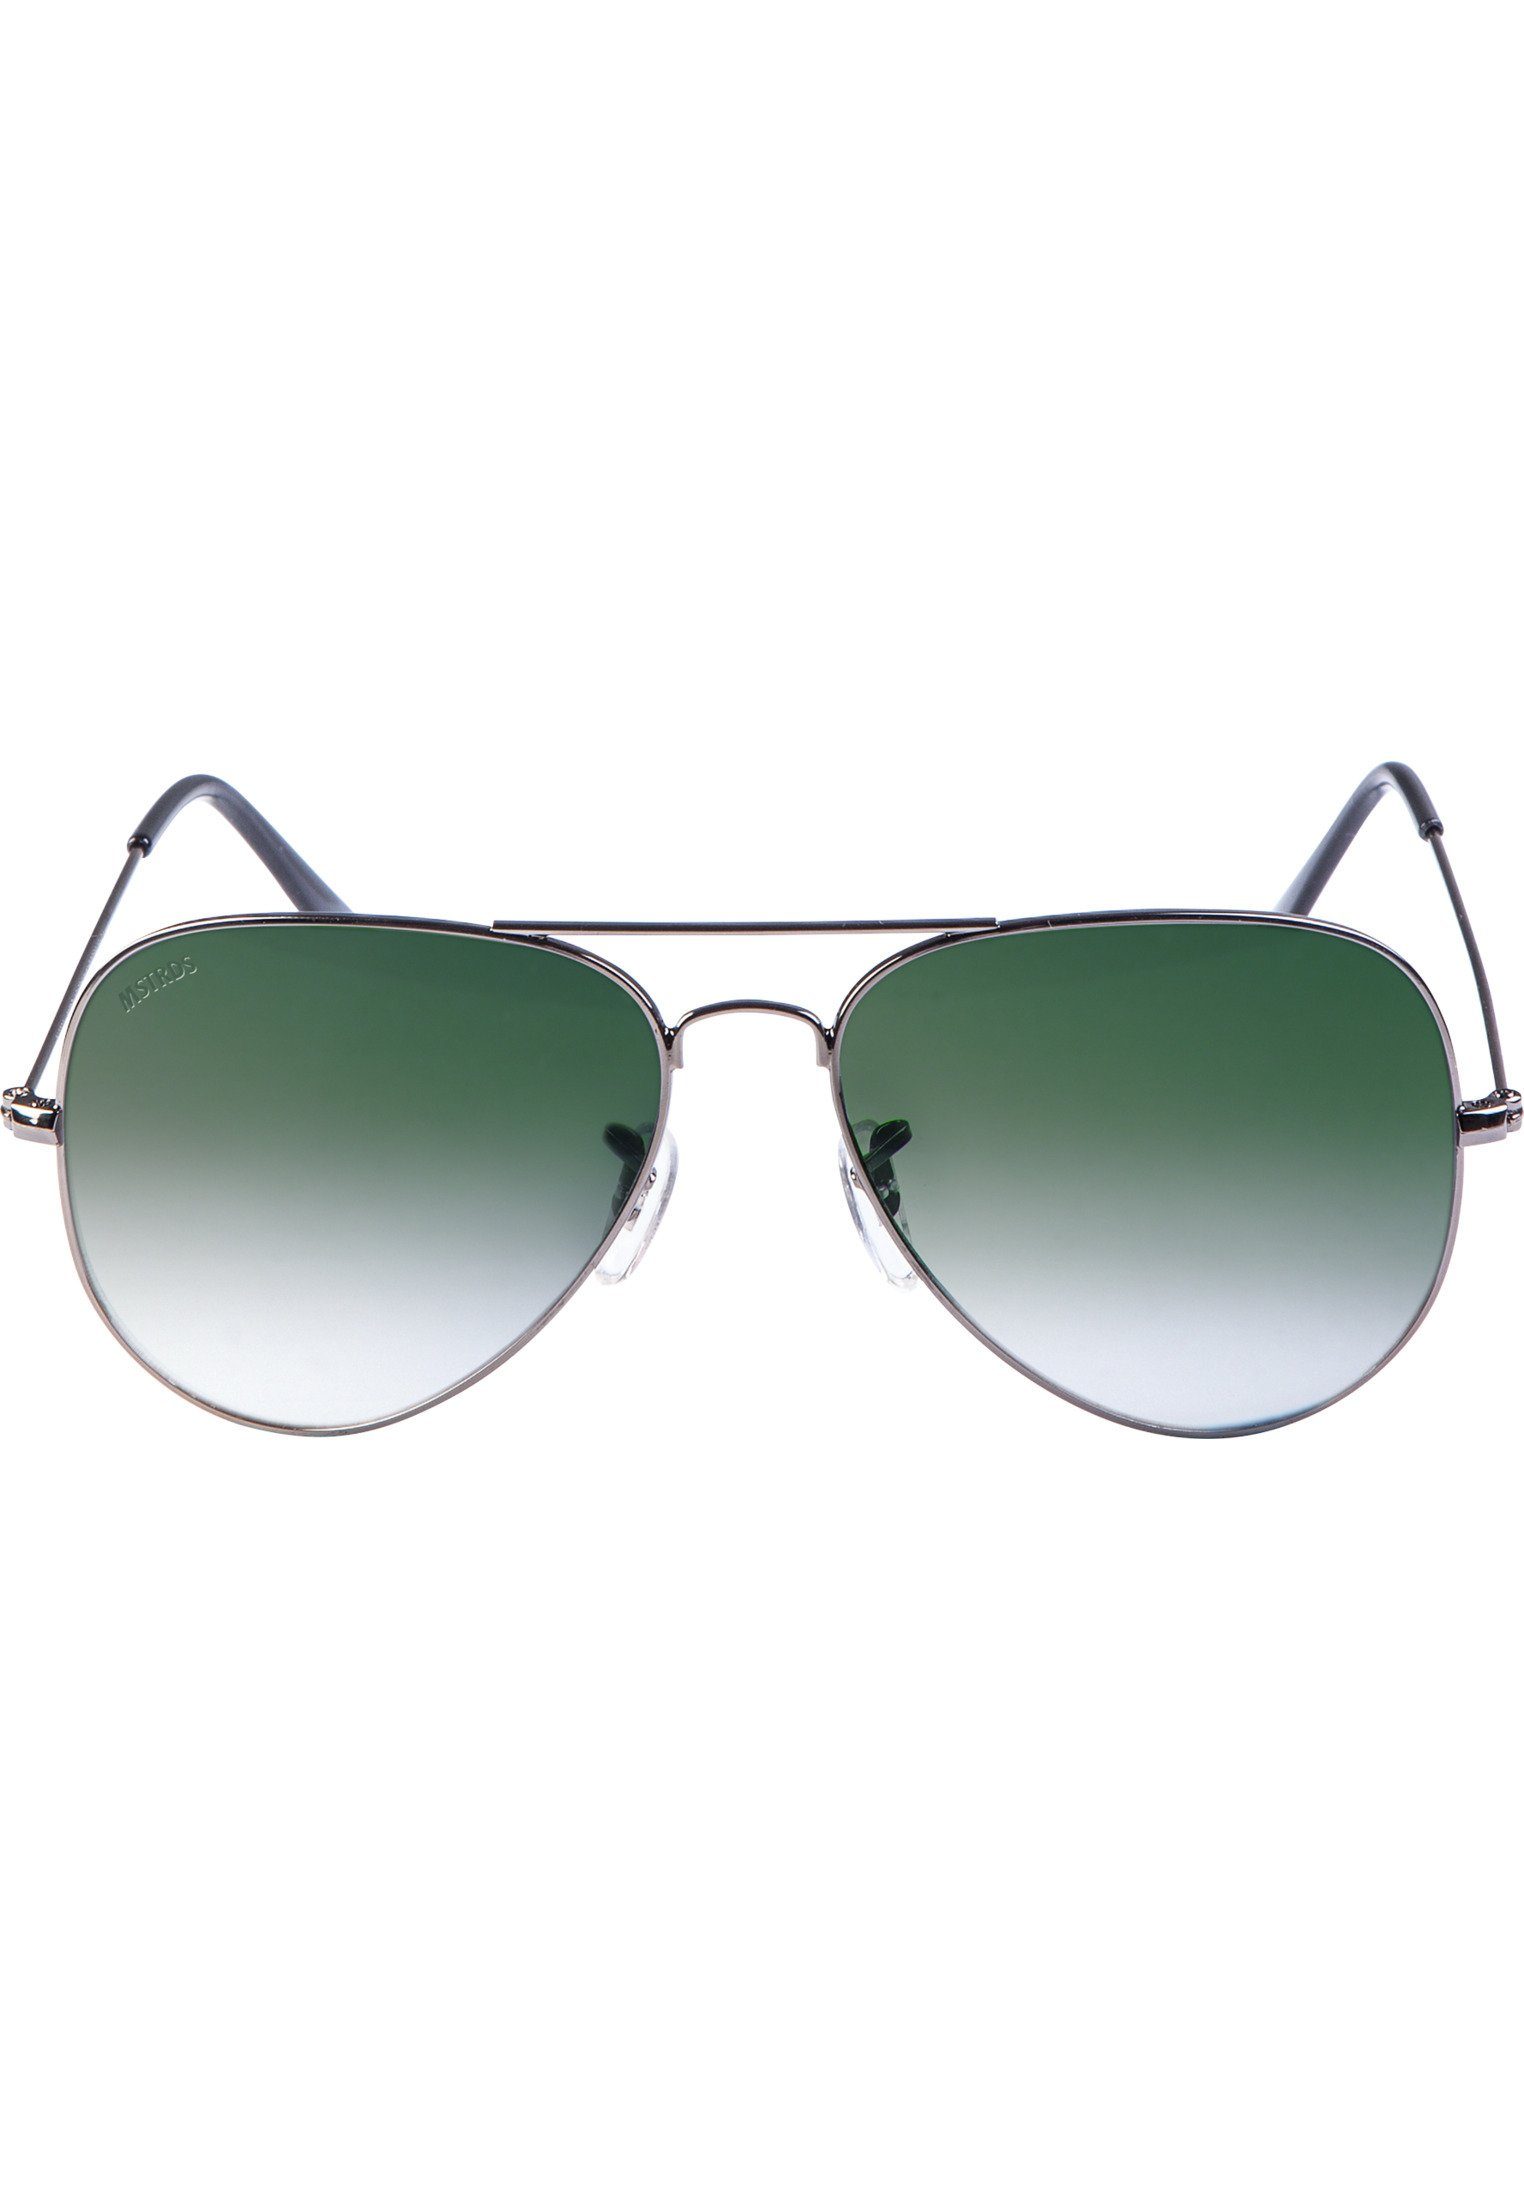 MSTRDS Sonnenbrille Accessoires PureAv gun/green Sunglasses Youth